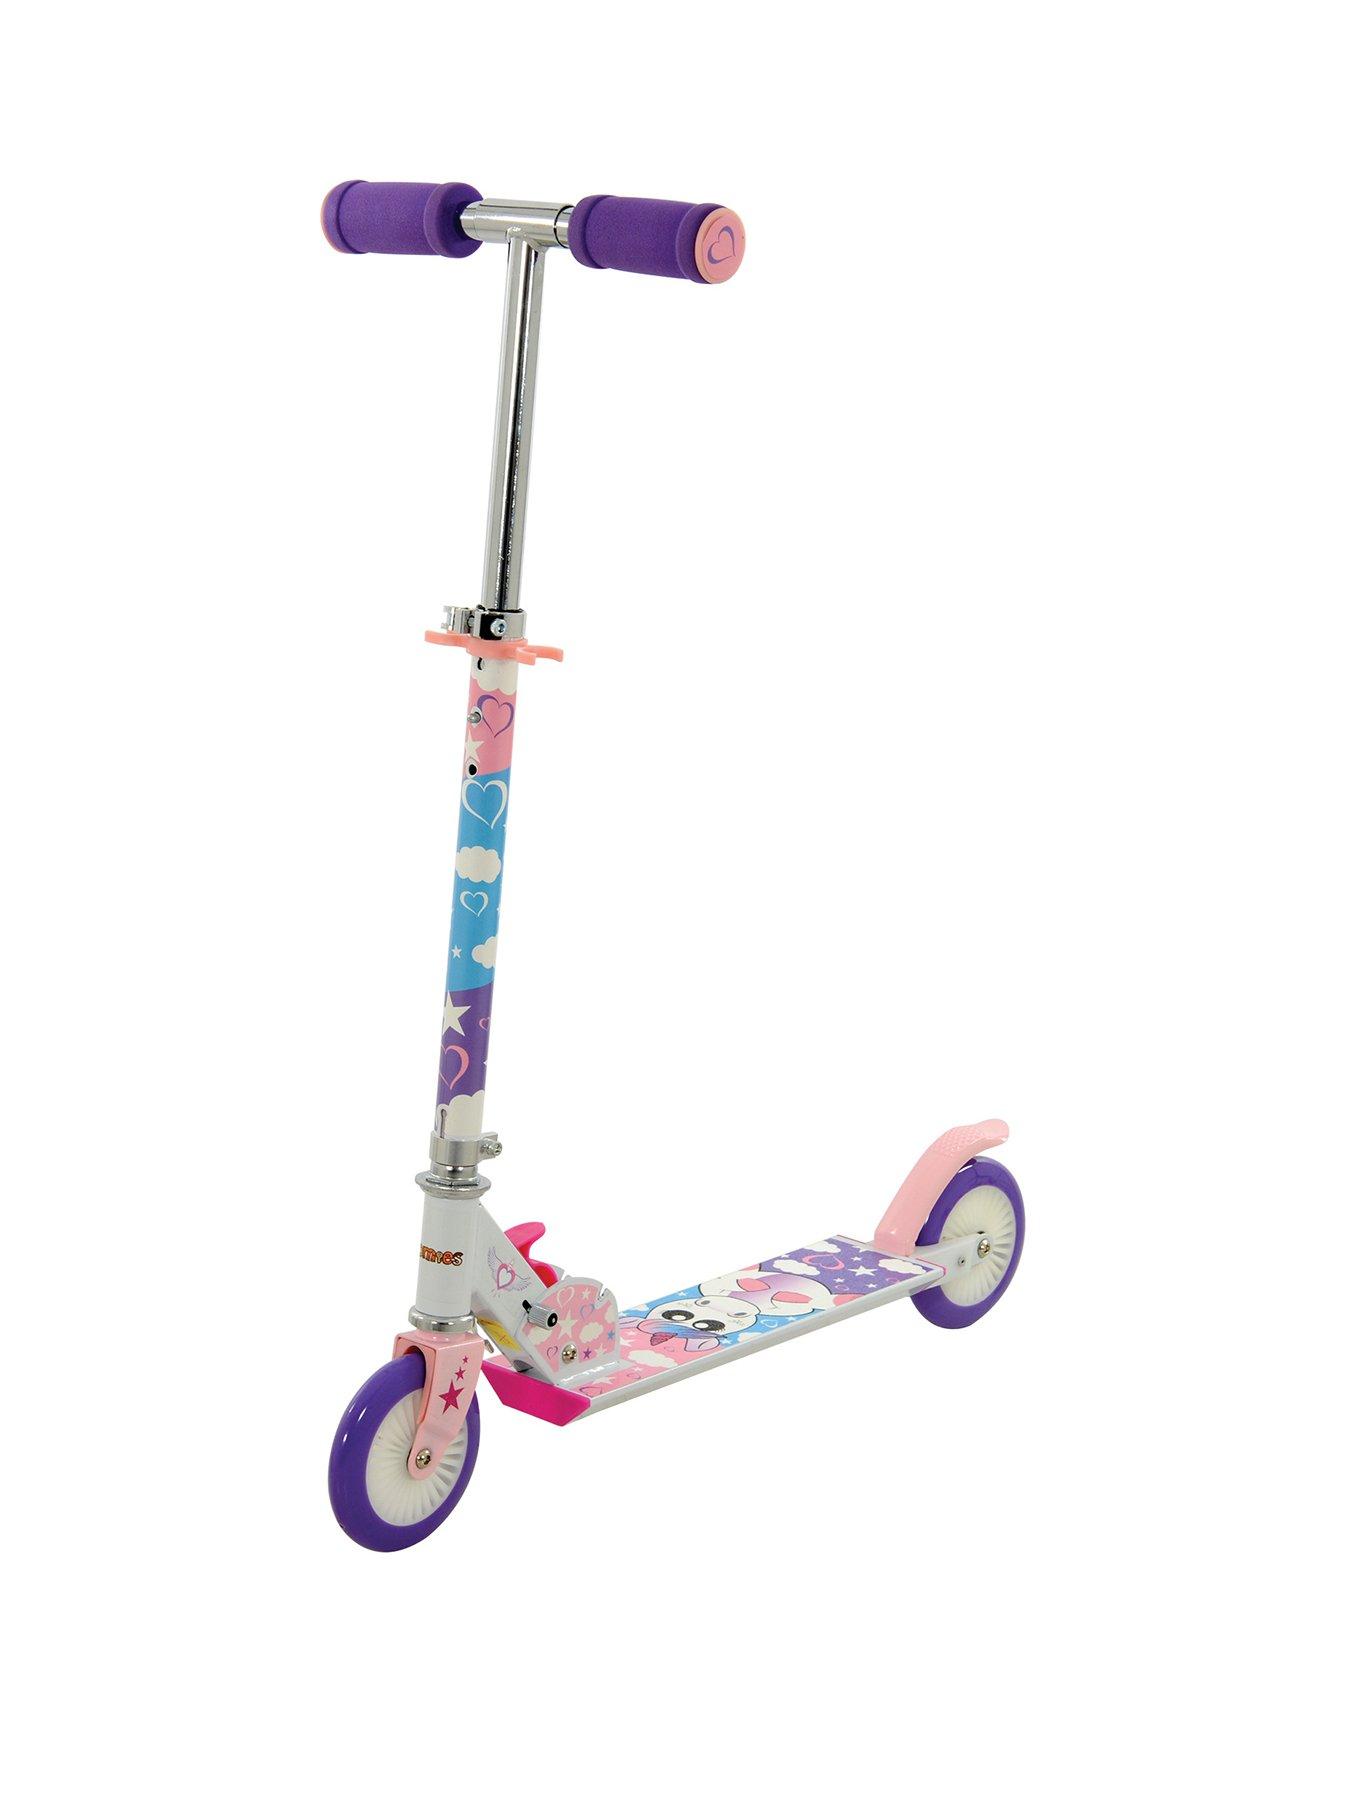 unicorn scooter